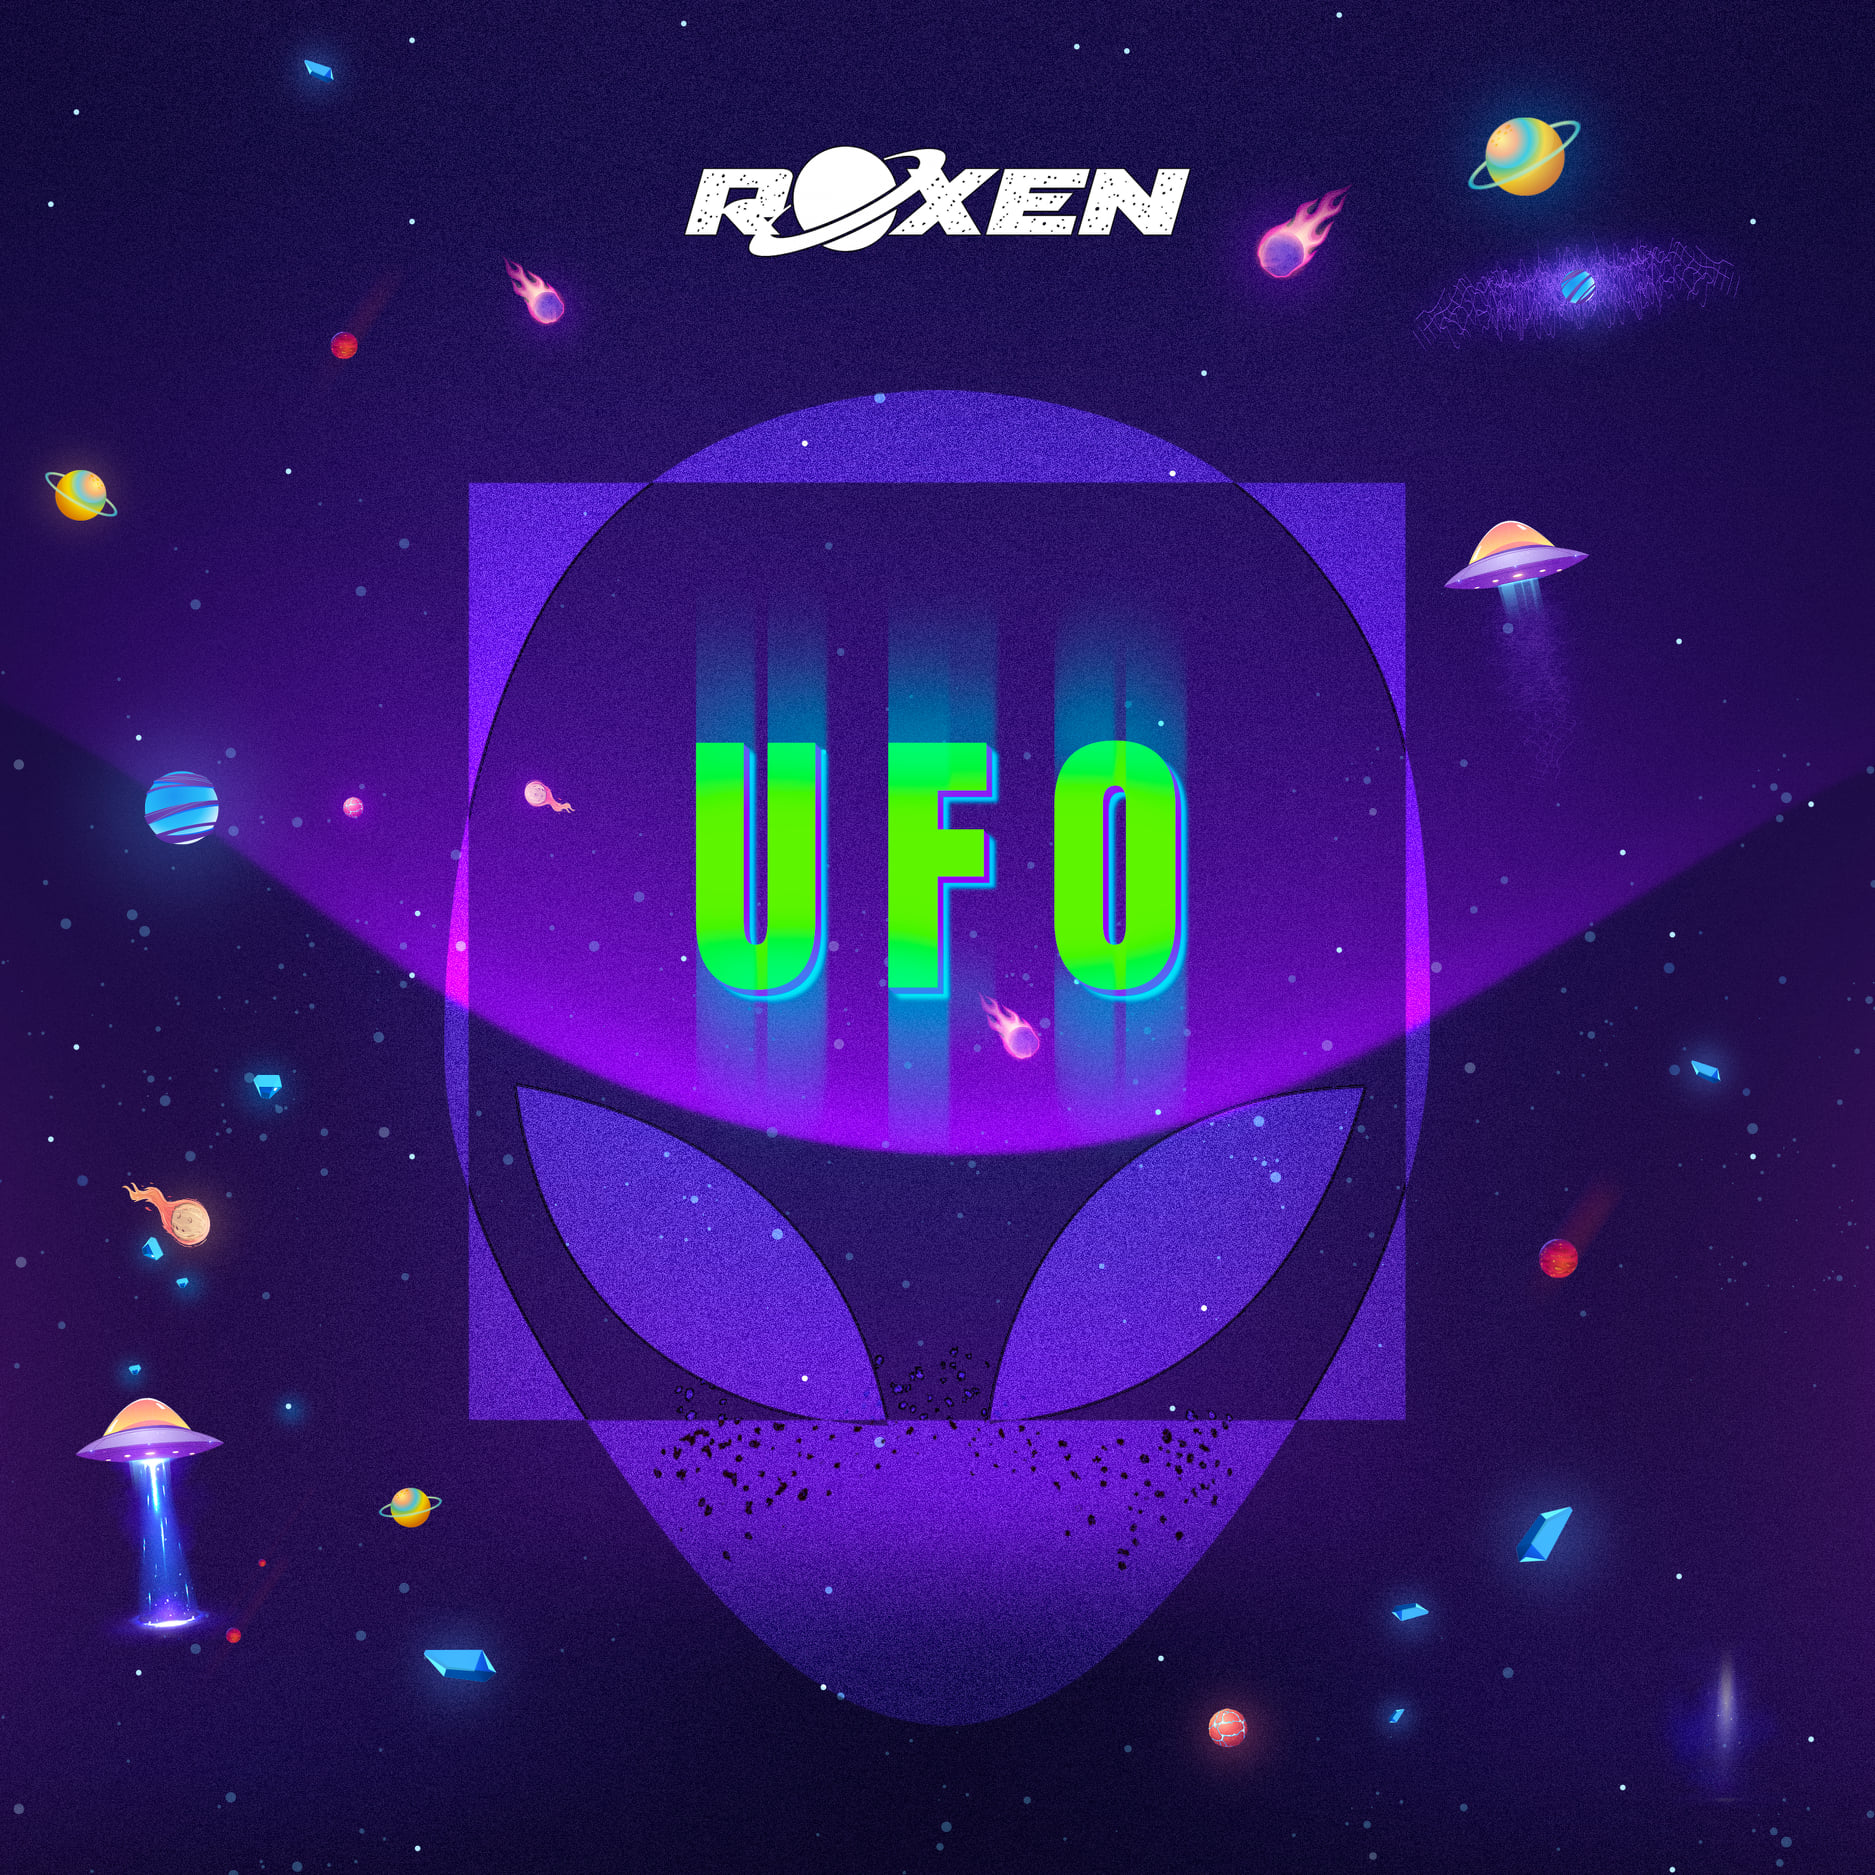 ufo - roxen